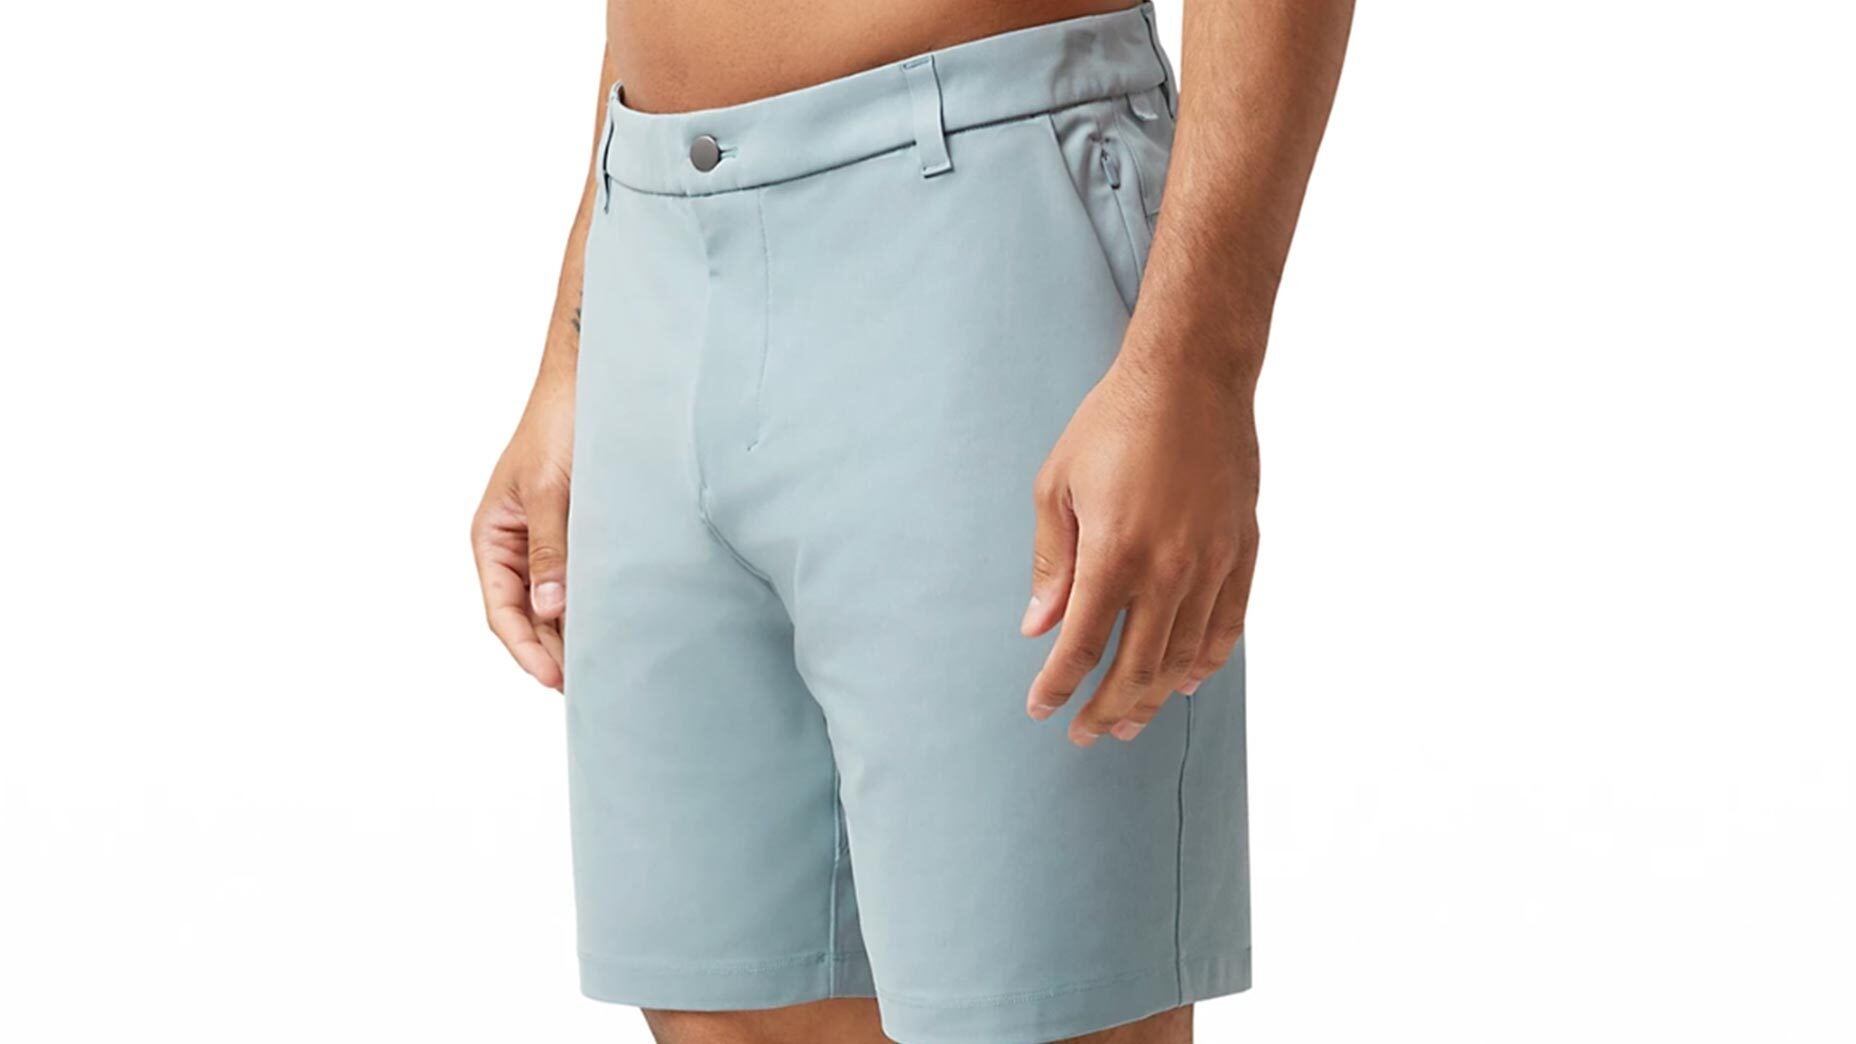 lululemon golf shorts mens